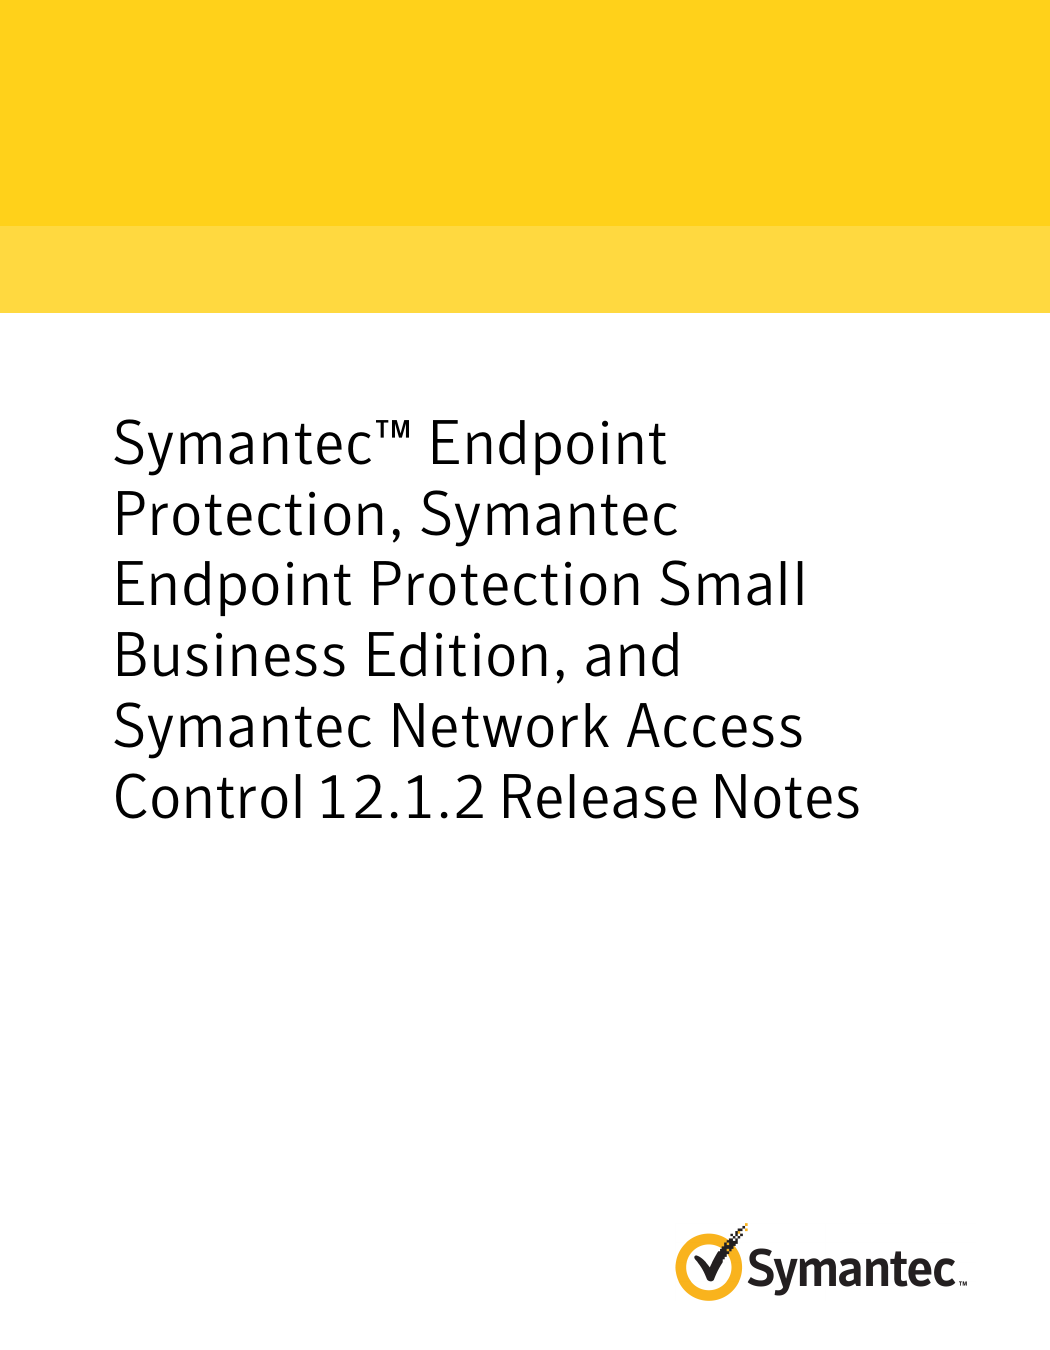 symantec endpoint protection 14 windows 10 compatibility